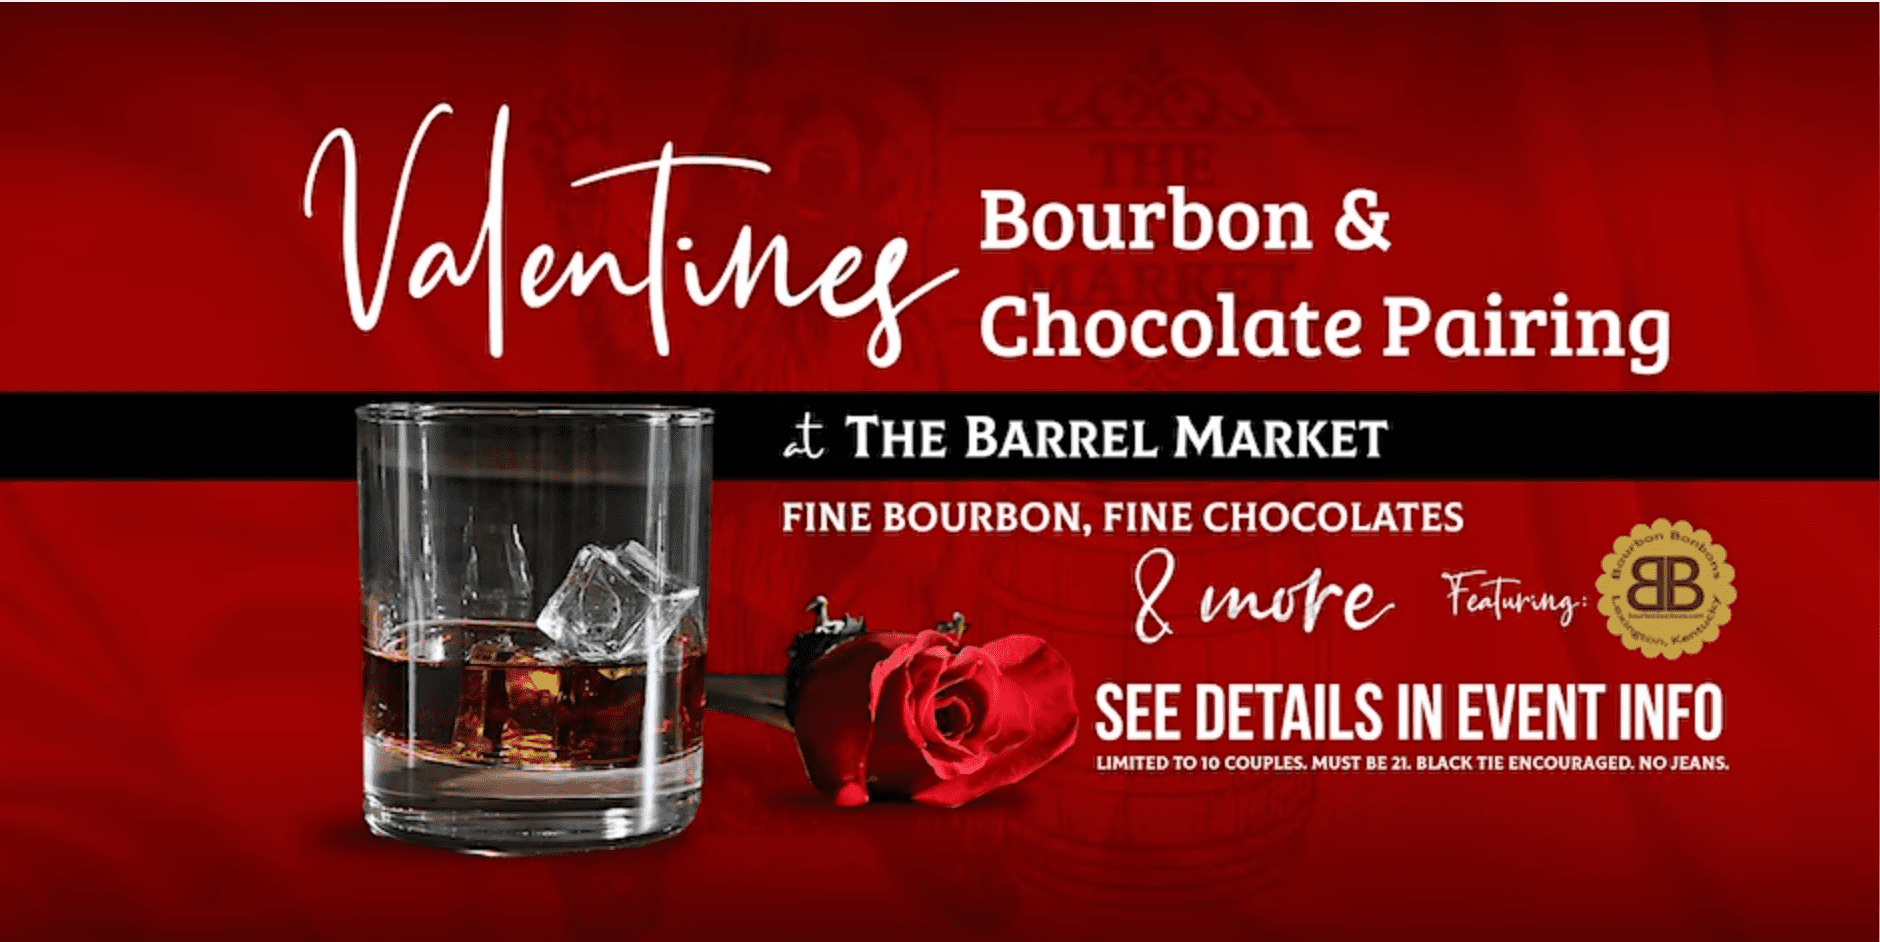 Valentine's Bourbon